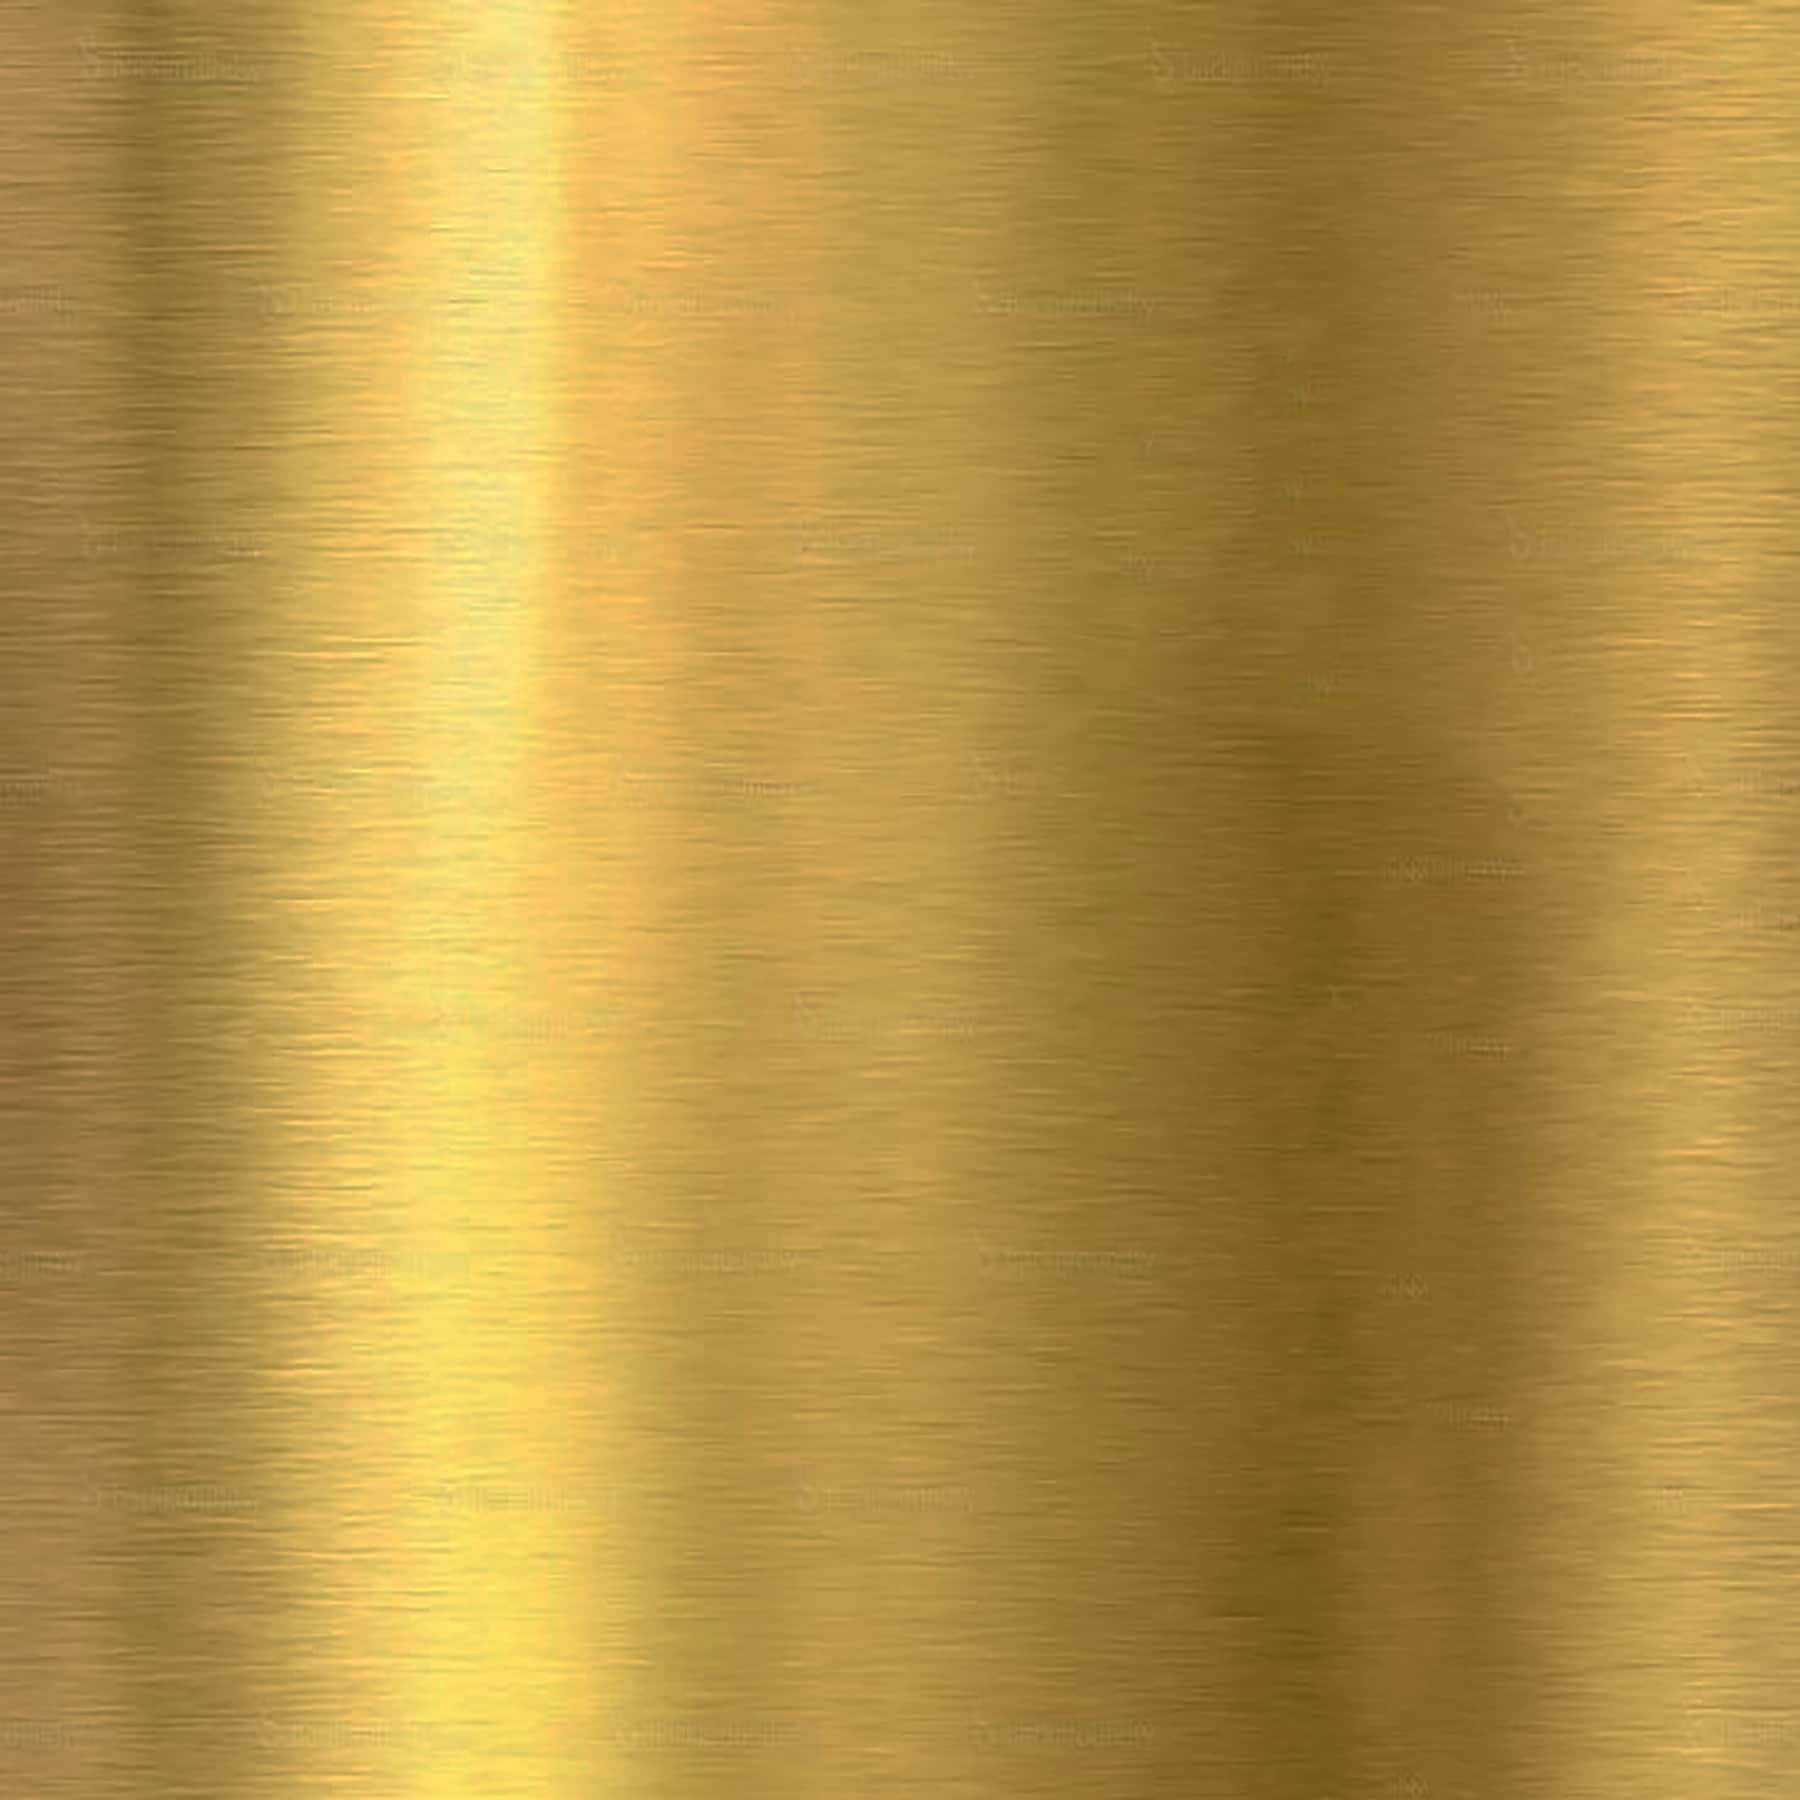 UNIVERSAL METALLIC GOLD 250ML - Rust-oleum